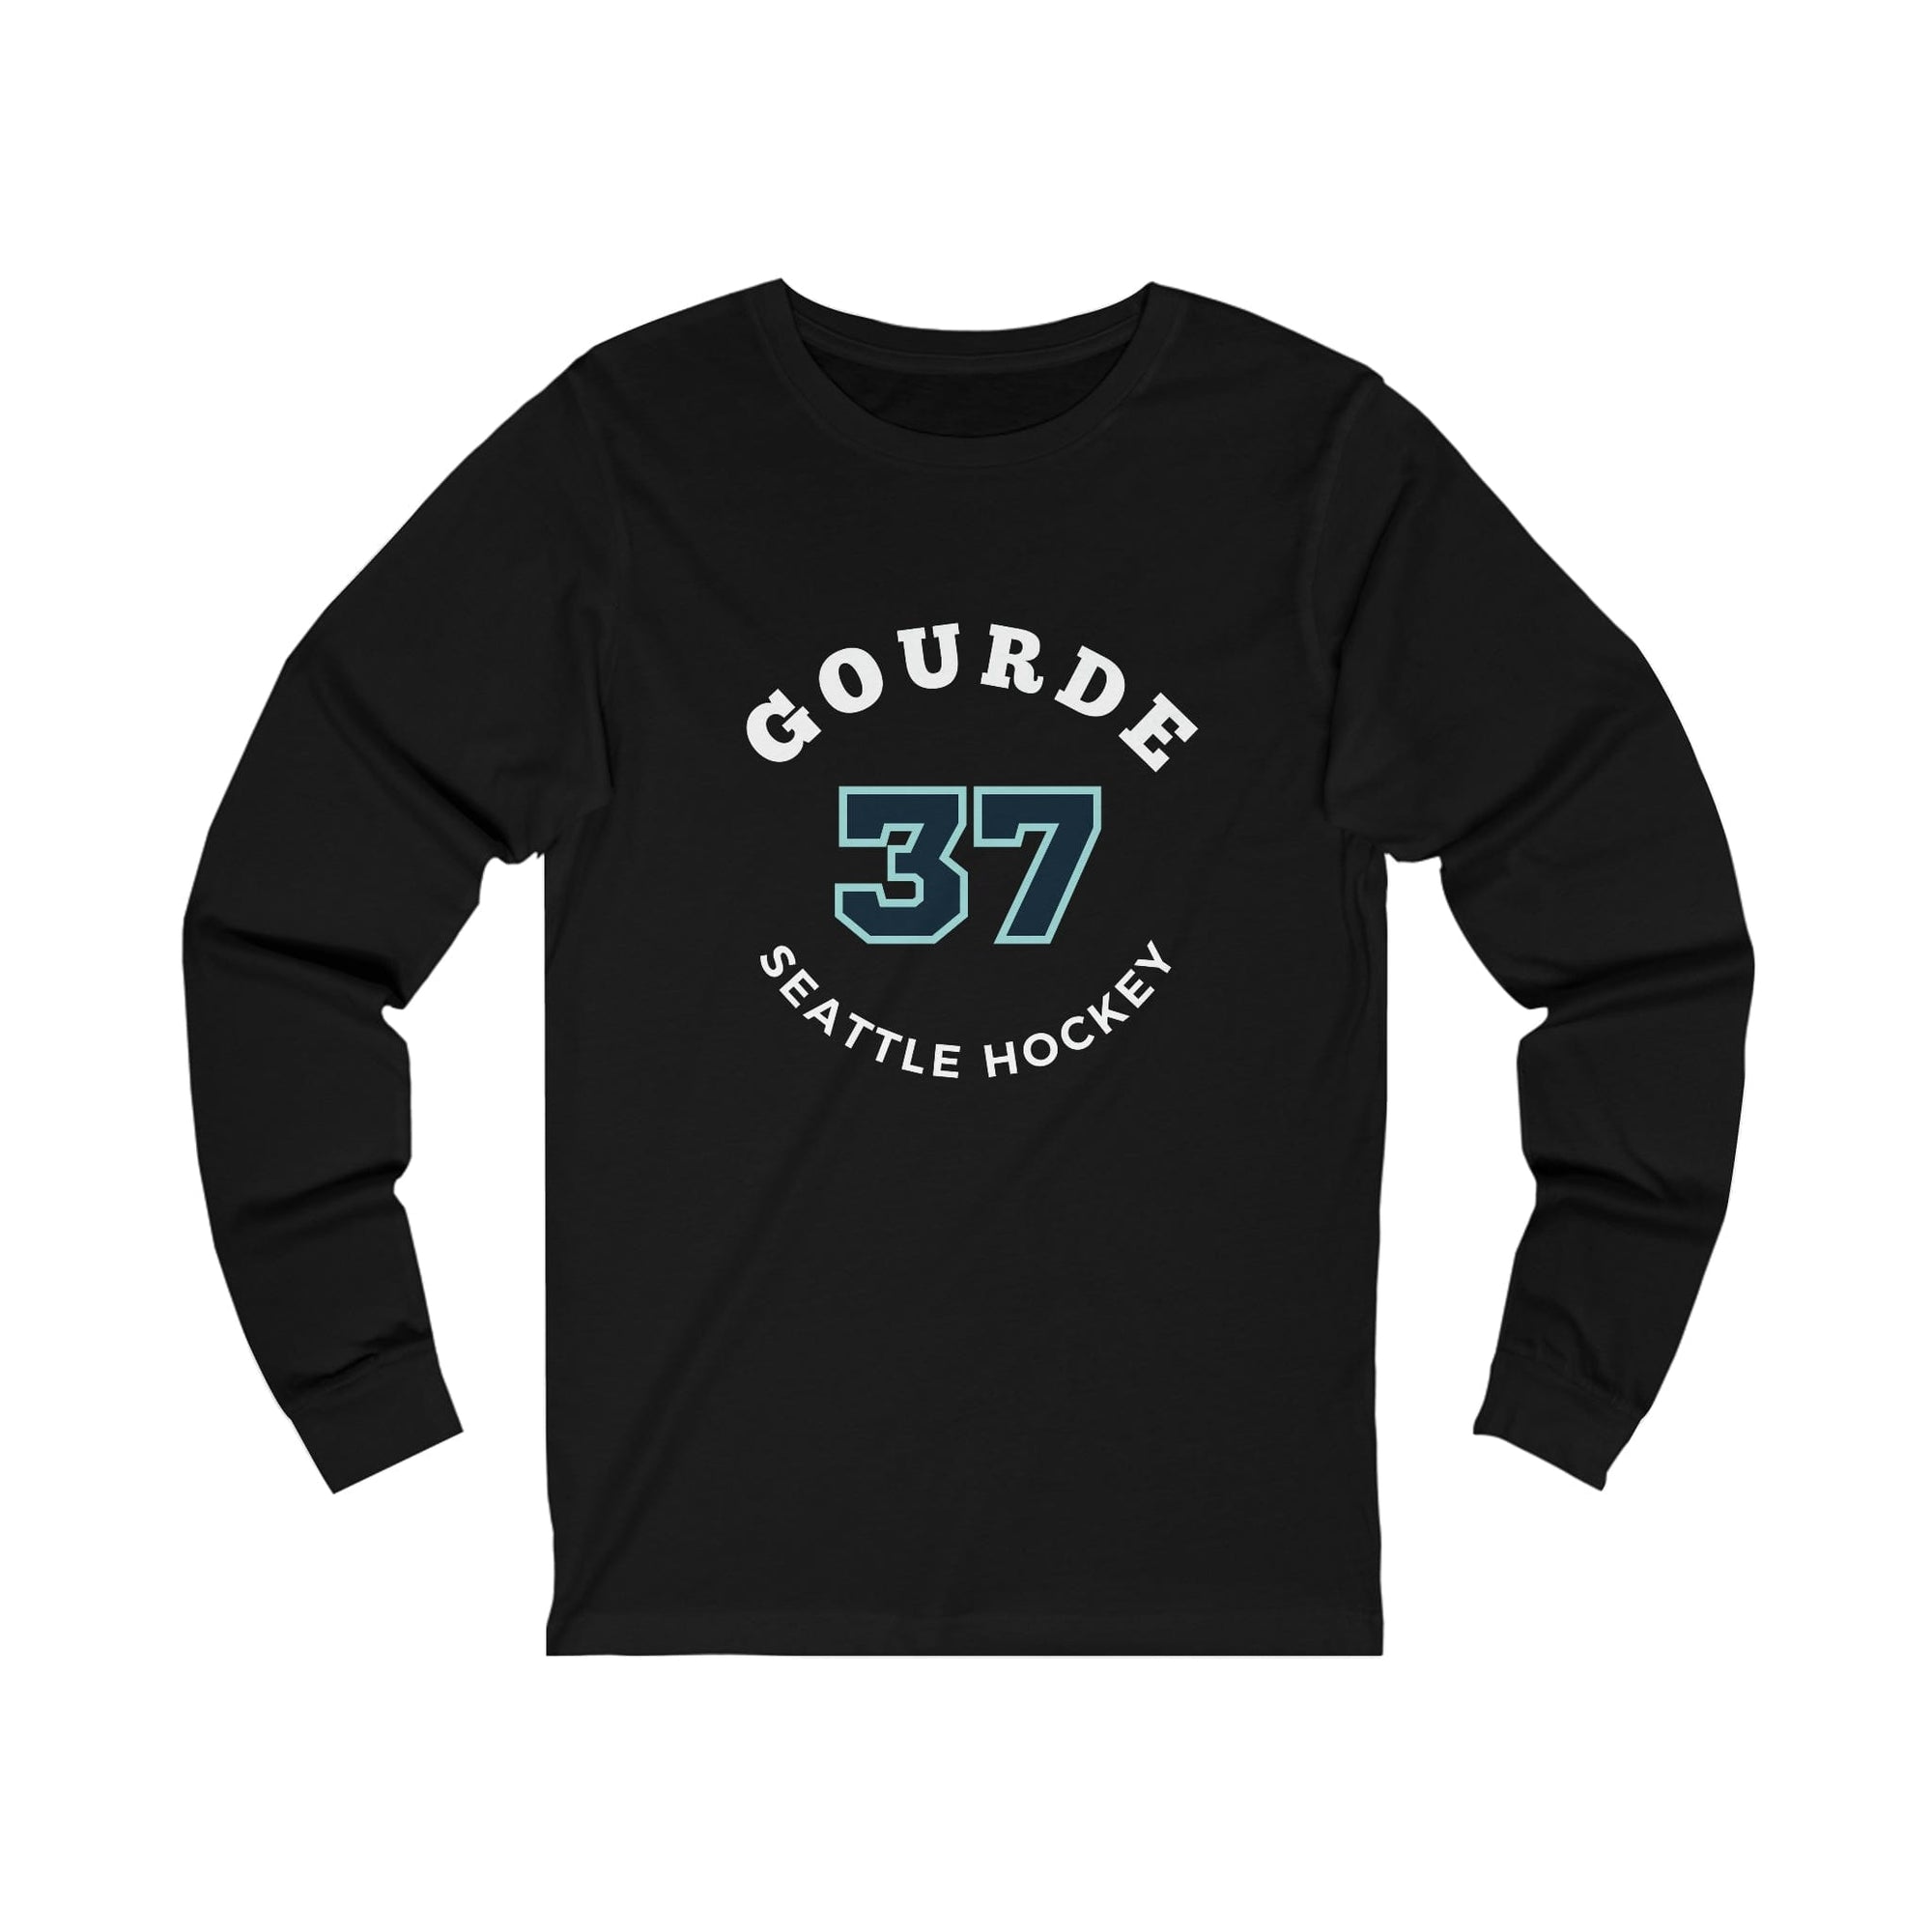 Long-sleeve Gourde 37 Seattle Hockey Number Arch Design Unisex Jersey Long Sleeve Shirt